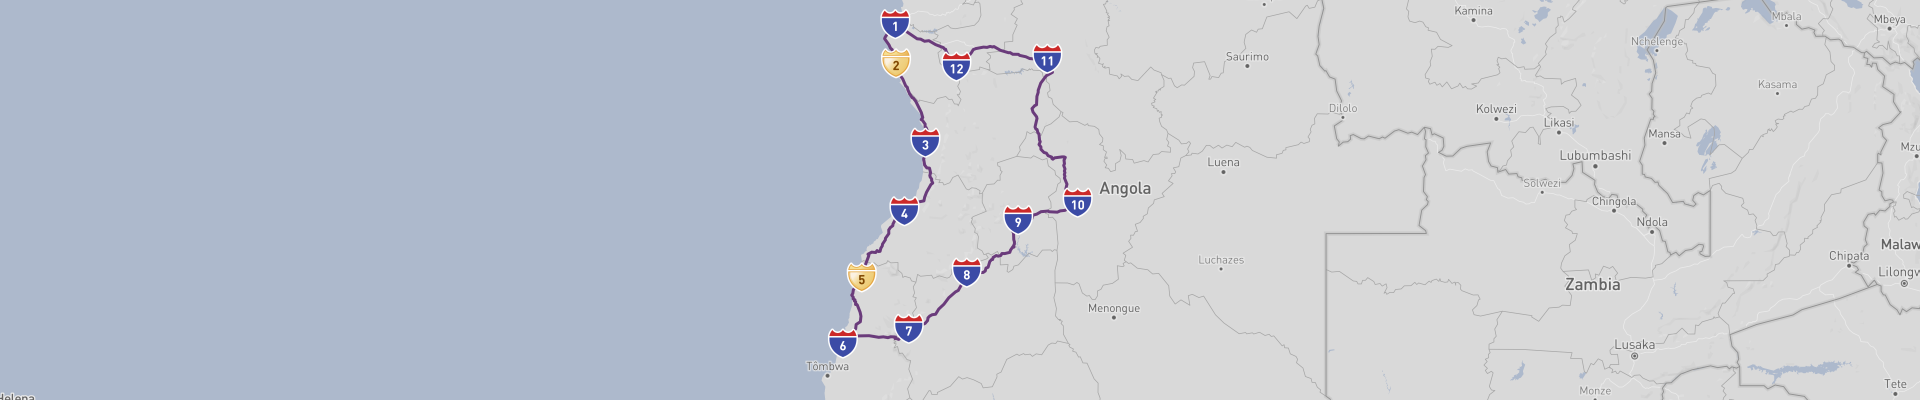 Itinéraire Angola 